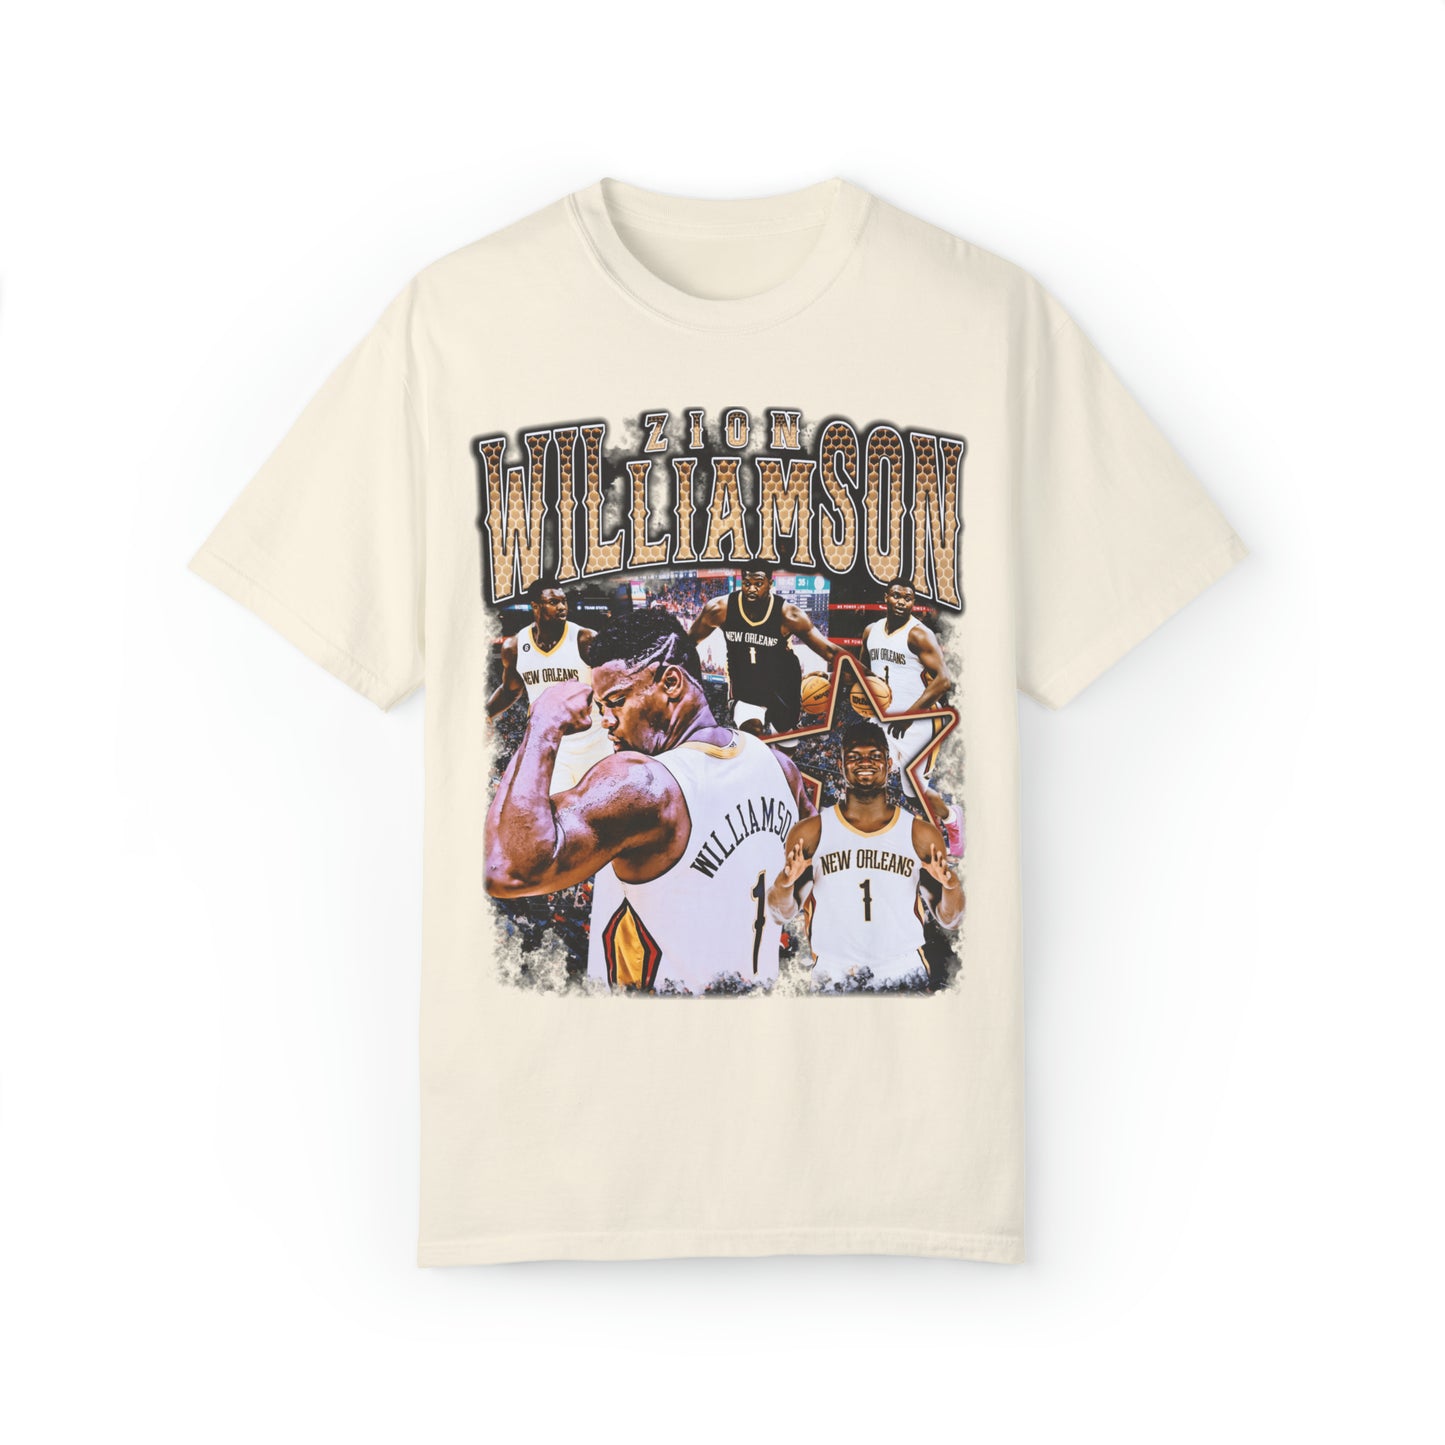 WIY x Williamson Vintage T-Shirt